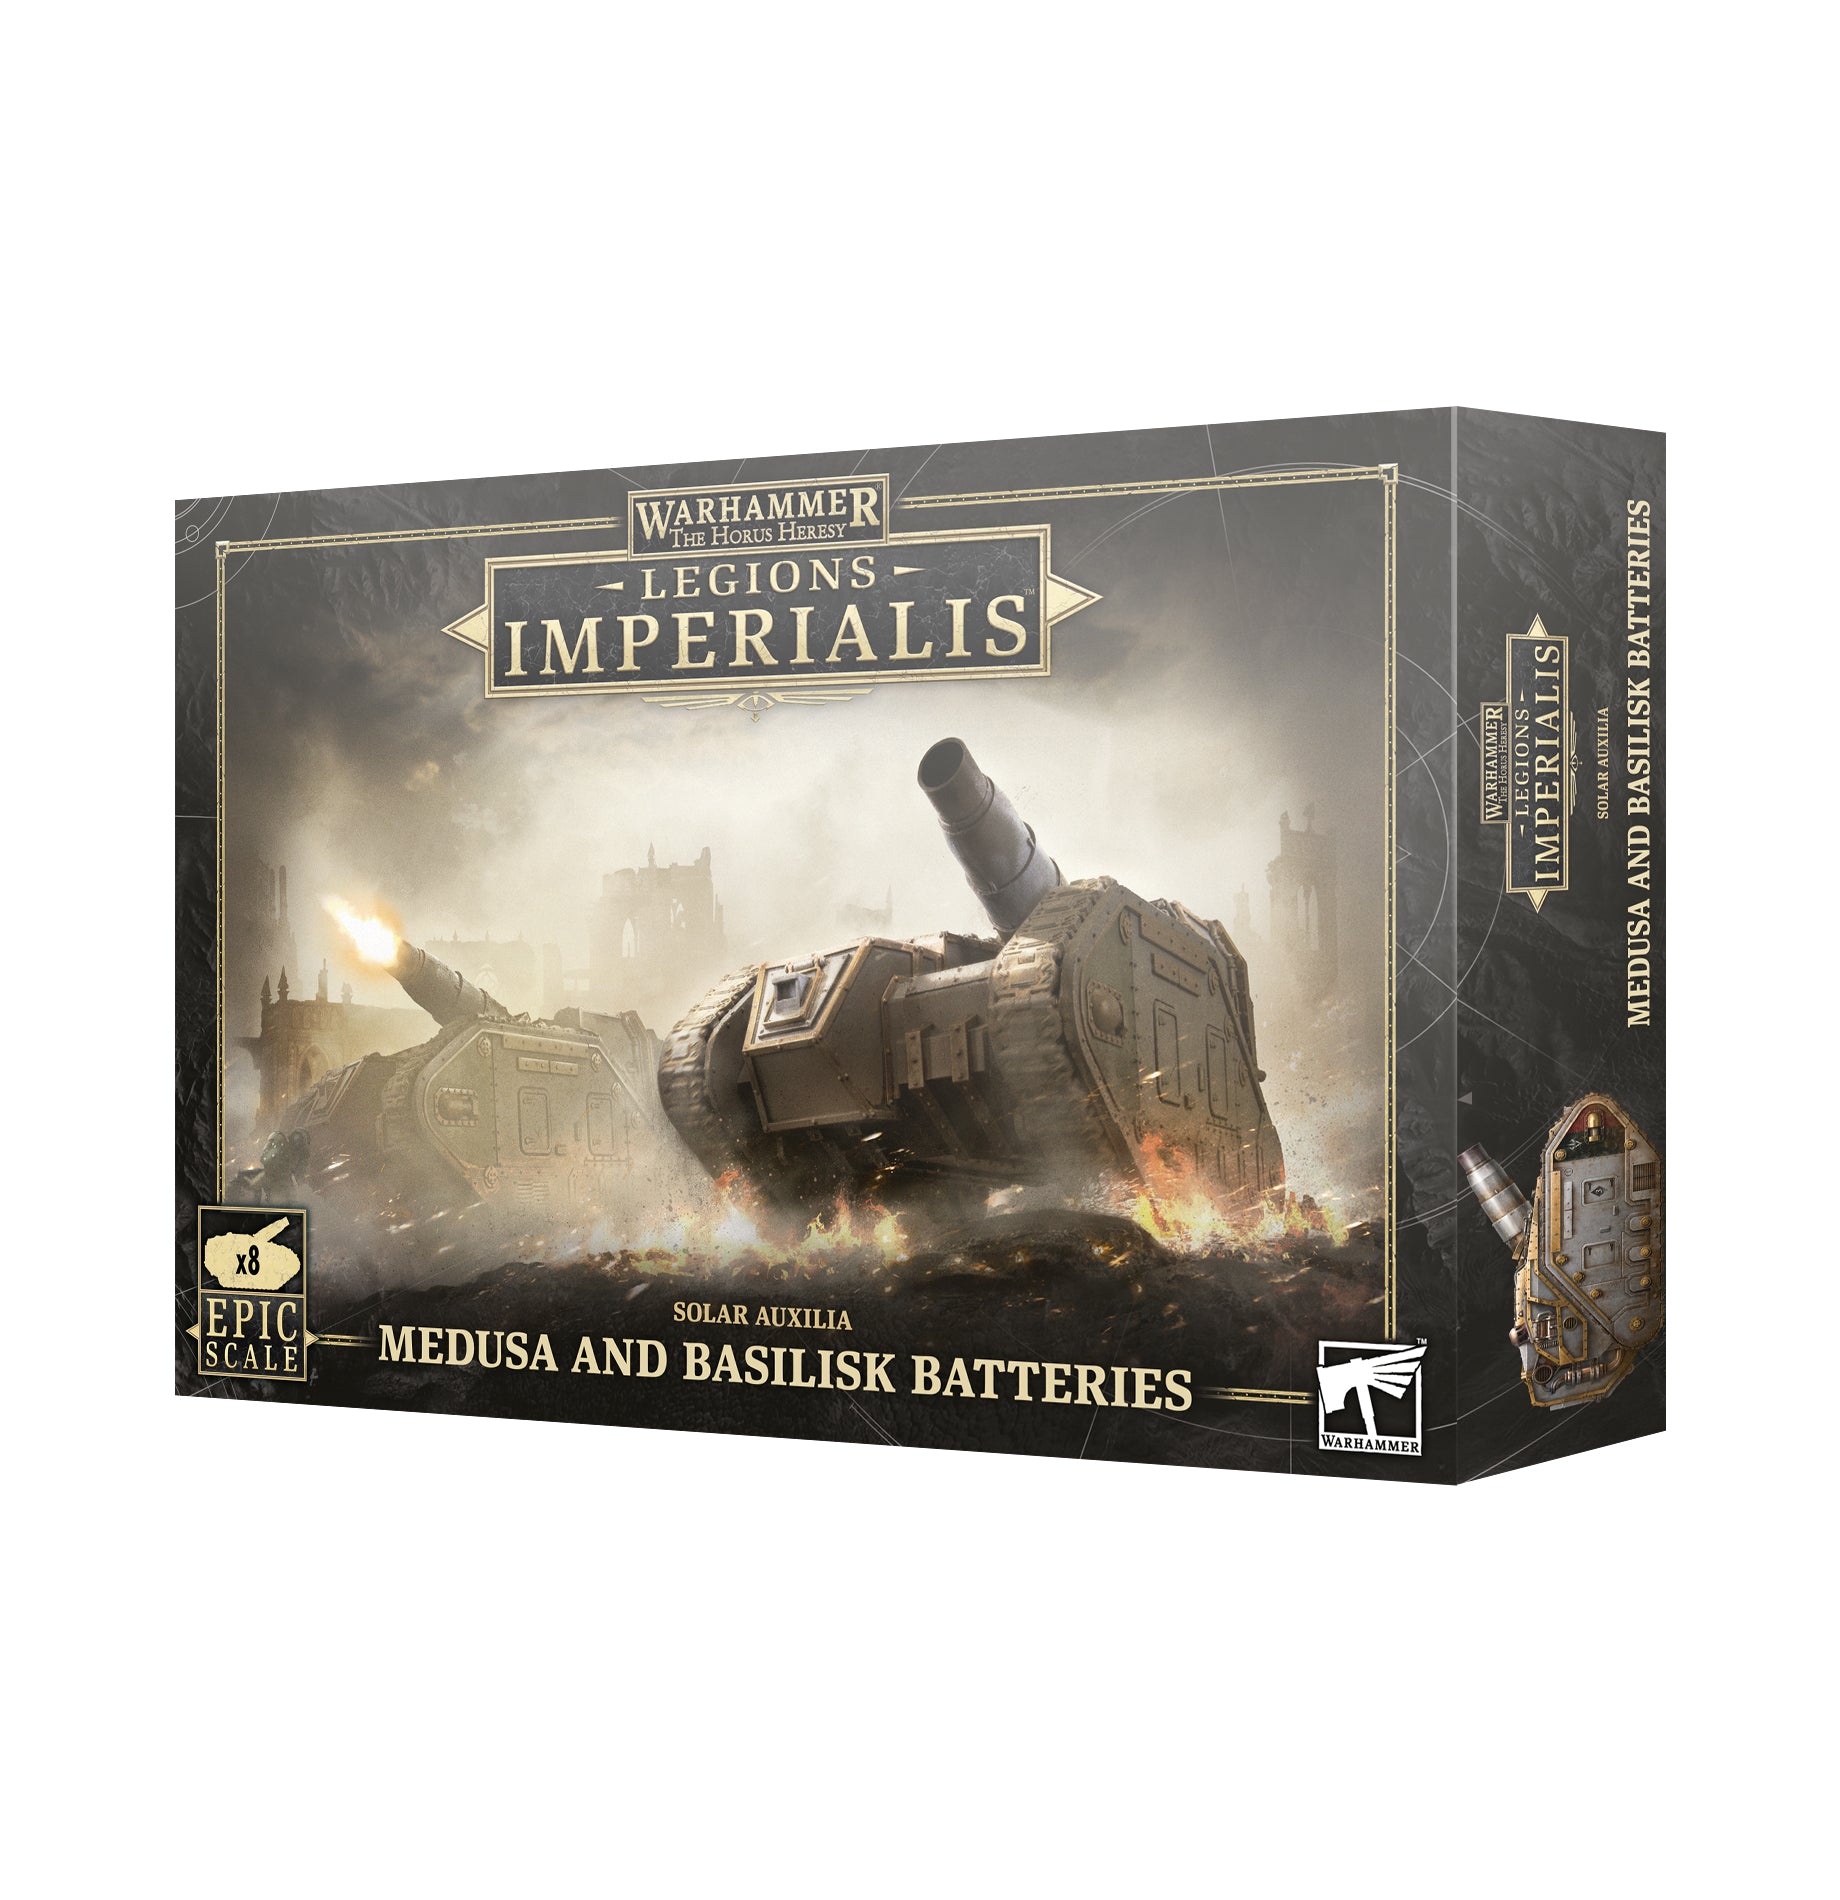 Warhammer LEGIONS IMPERIALIS: SOLAR AUXILIA BASILISKS/MEDUSAS | Impulse Games and Hobbies